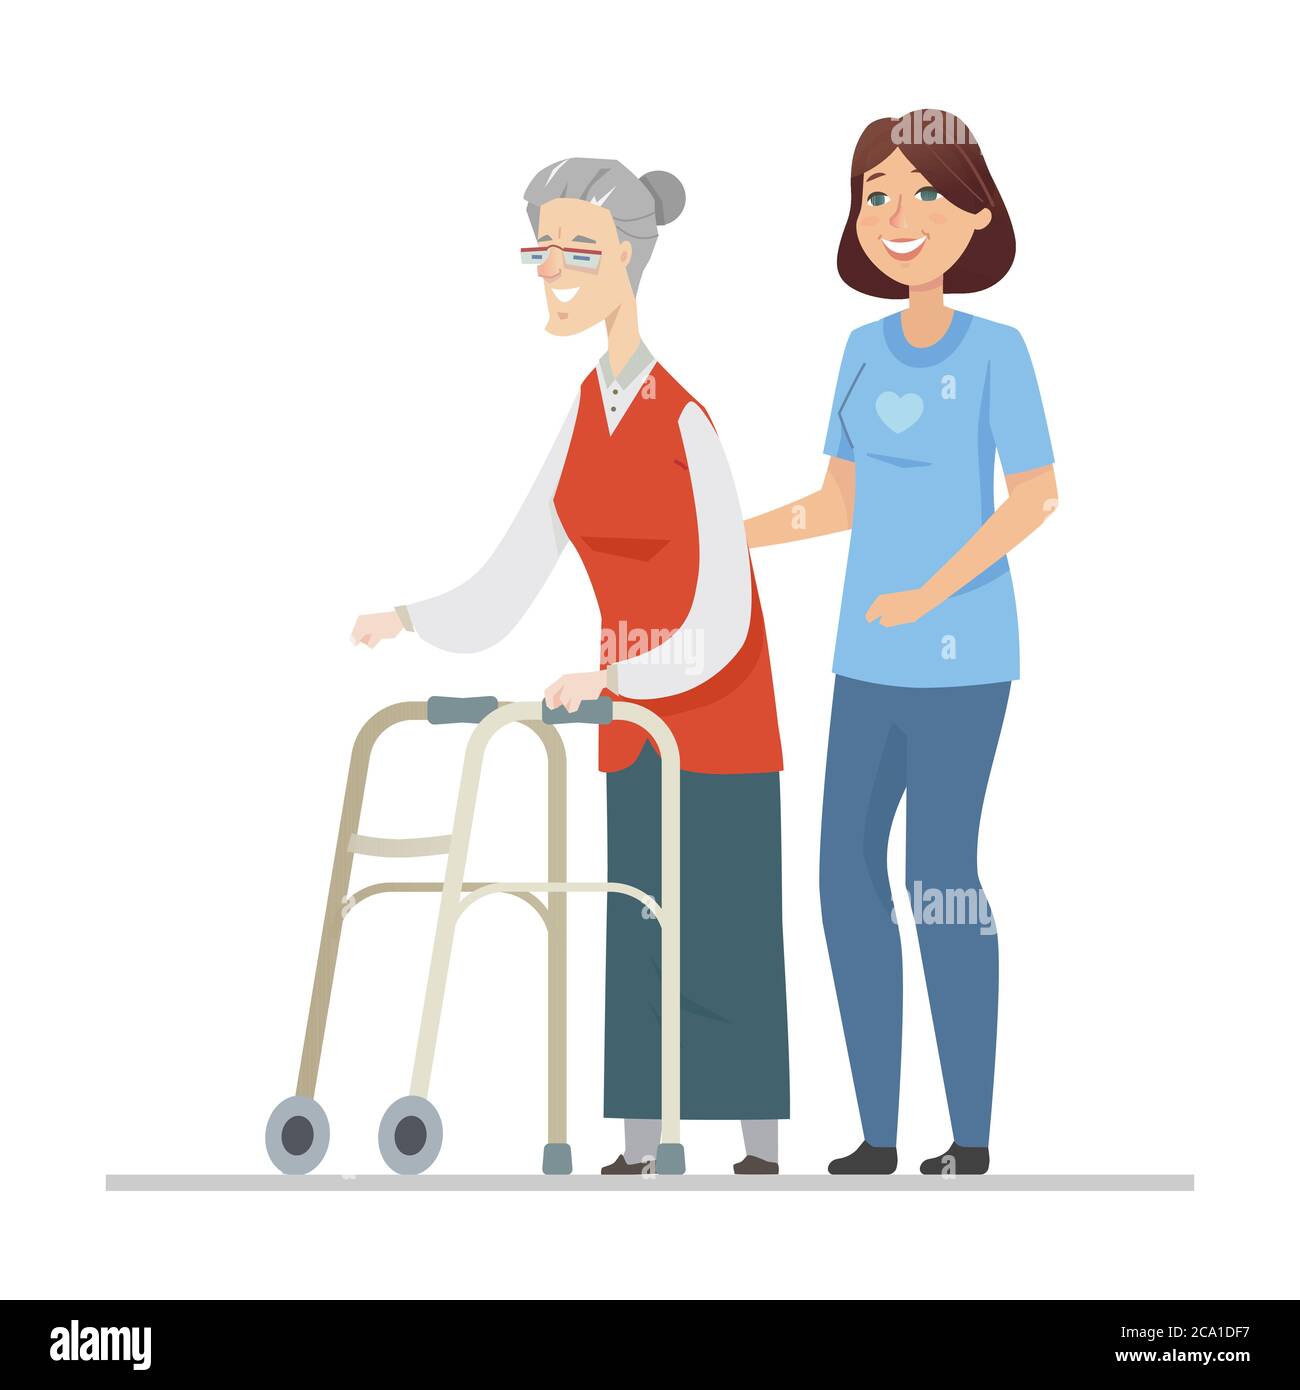 Volunteer helping senior woman - flat design style illustration Stock Vector